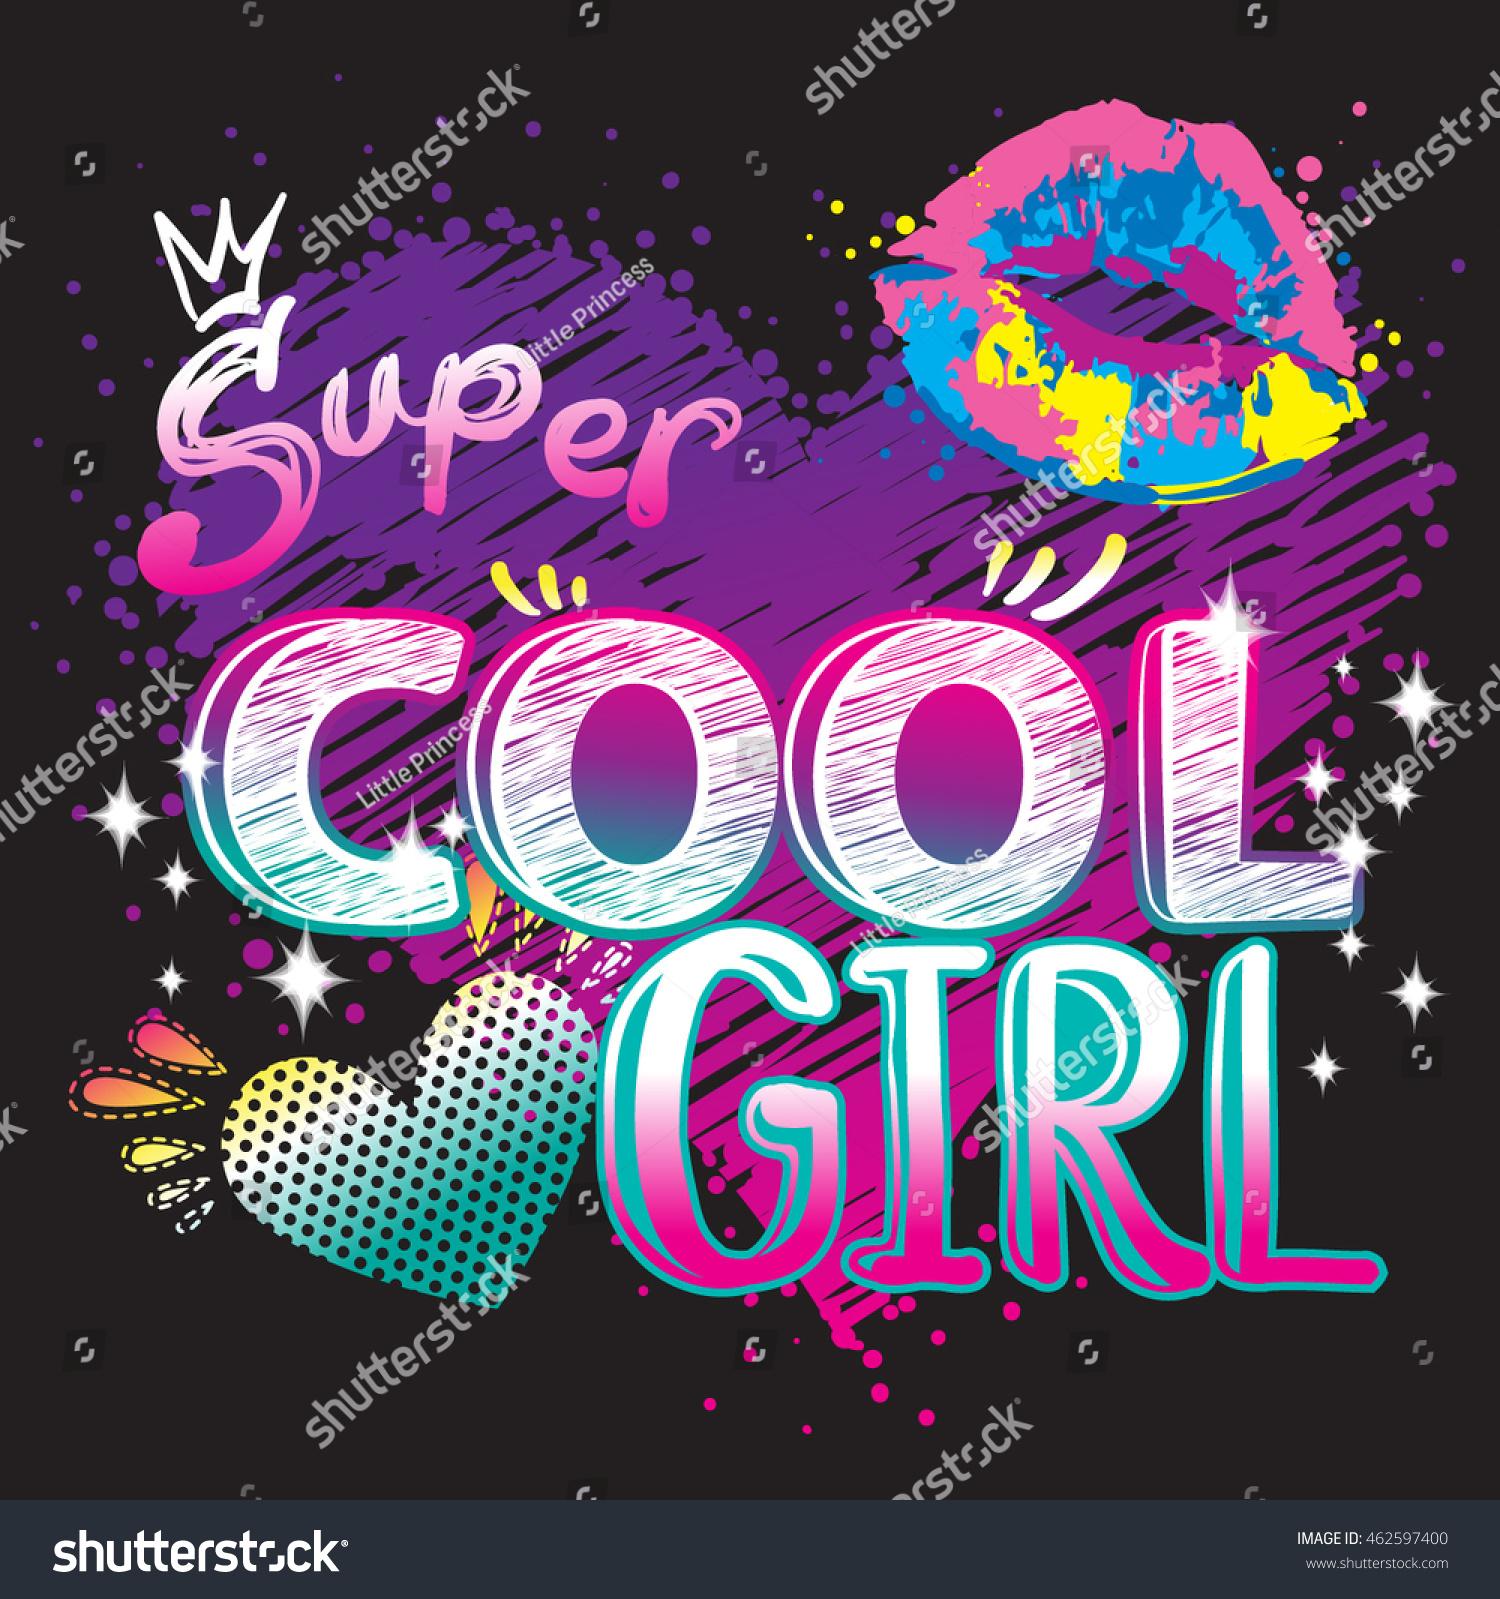 Super Cool Girl Background